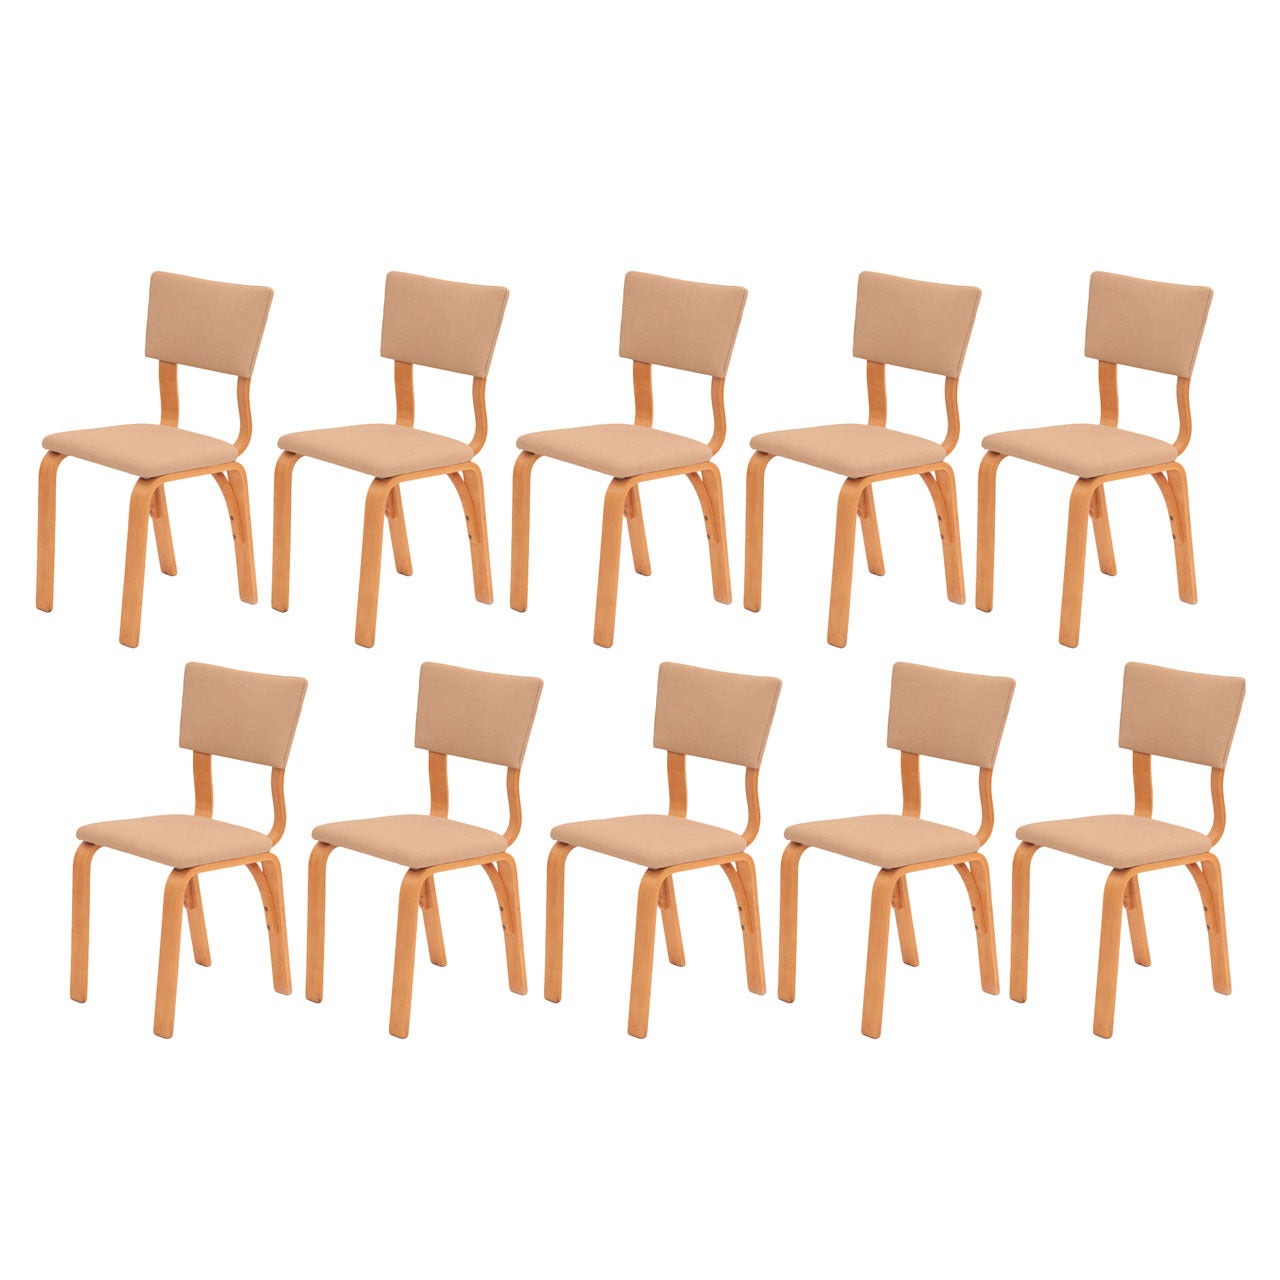 Ten Joe Atkinson for Thonet Dining Chairs